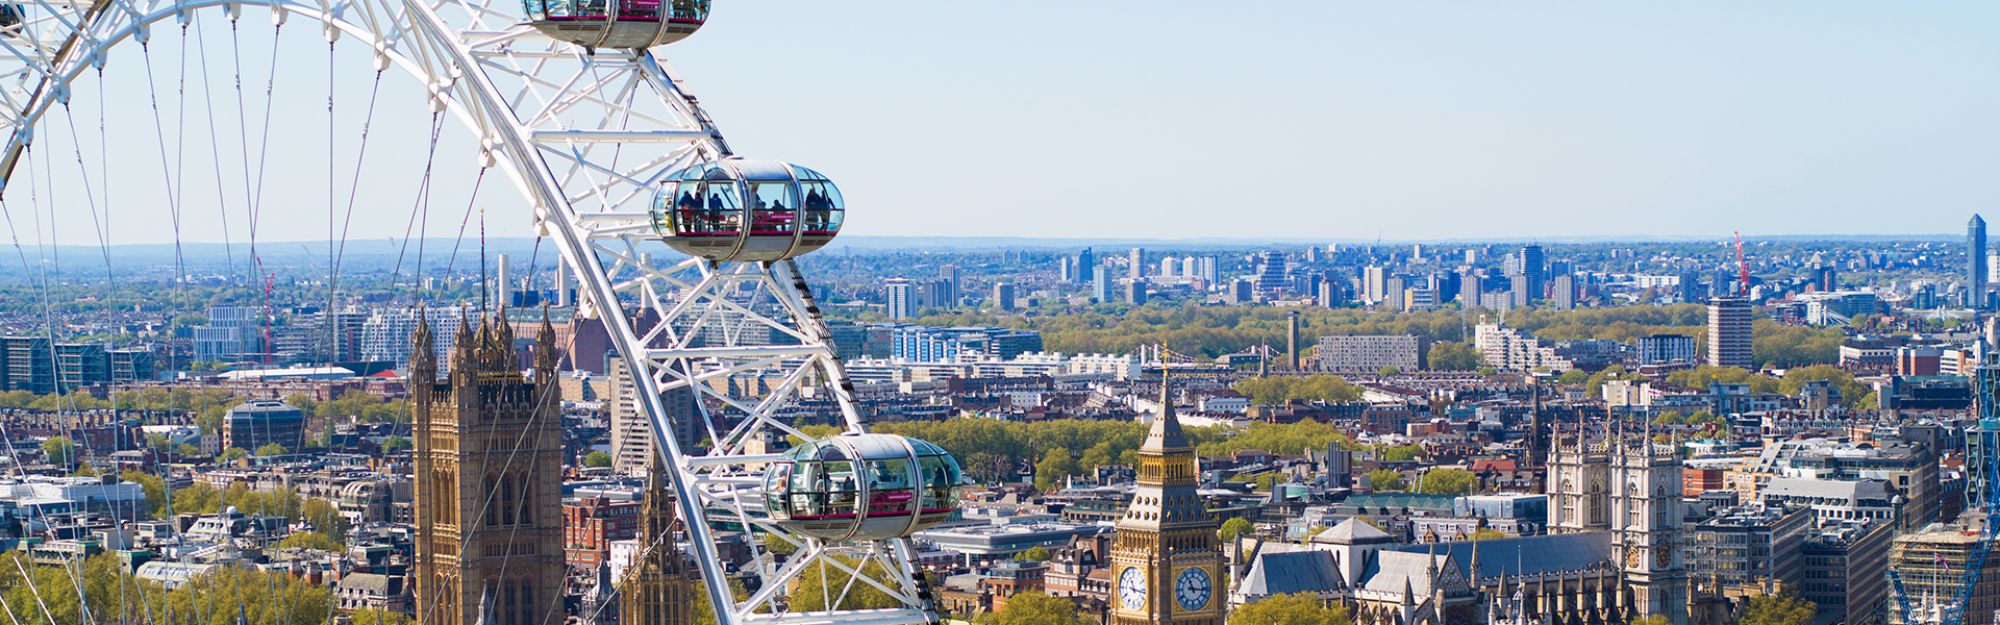 The London Eye, London - Book Tickets & Tours